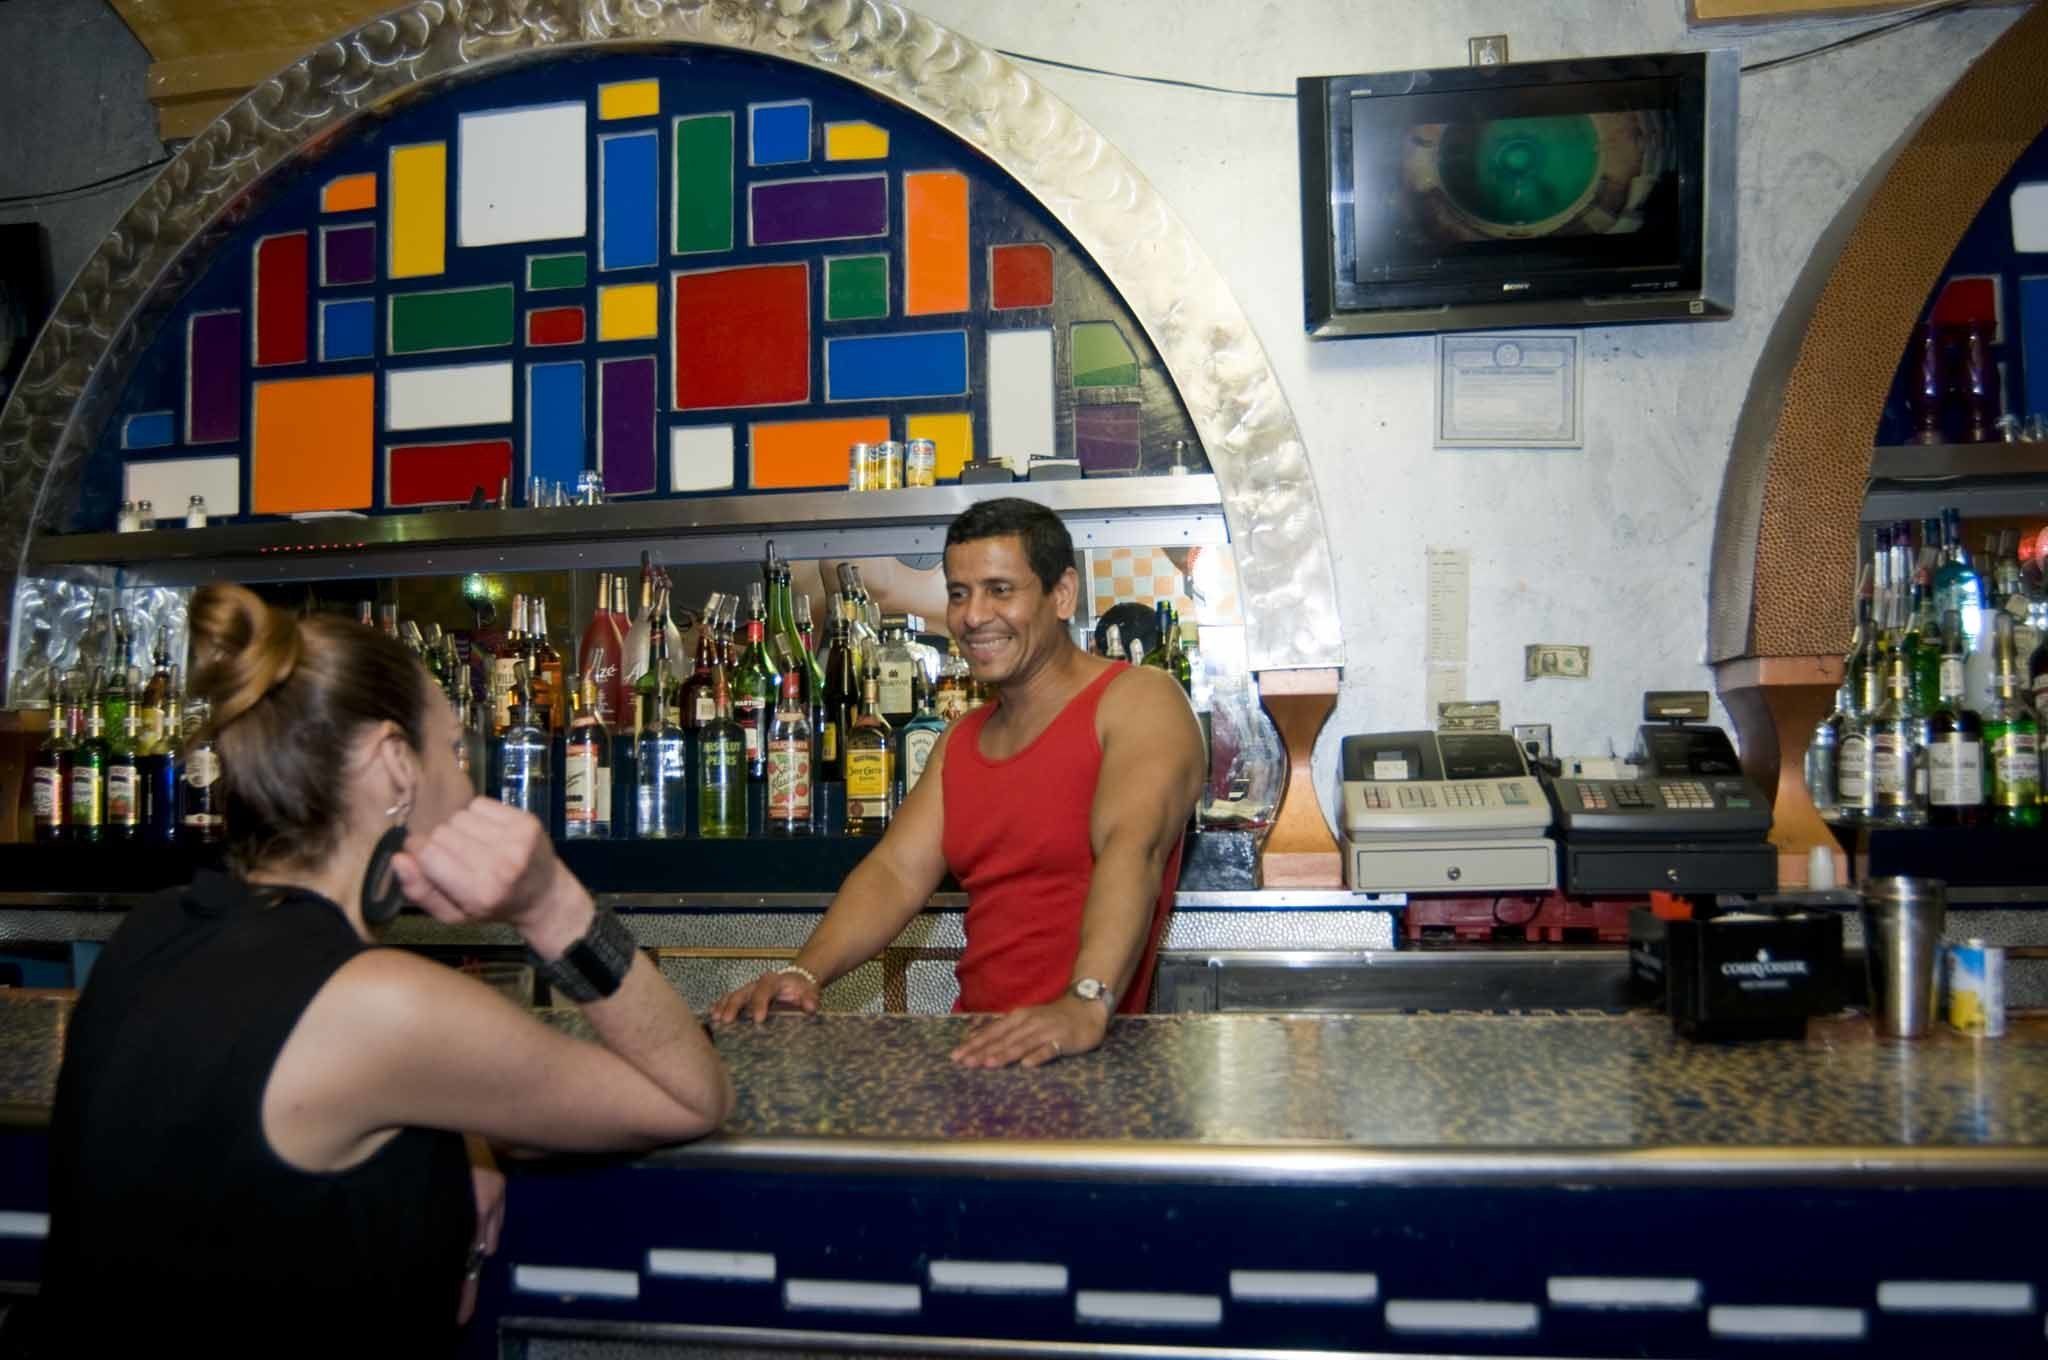 New york transvestite bars strip clubs